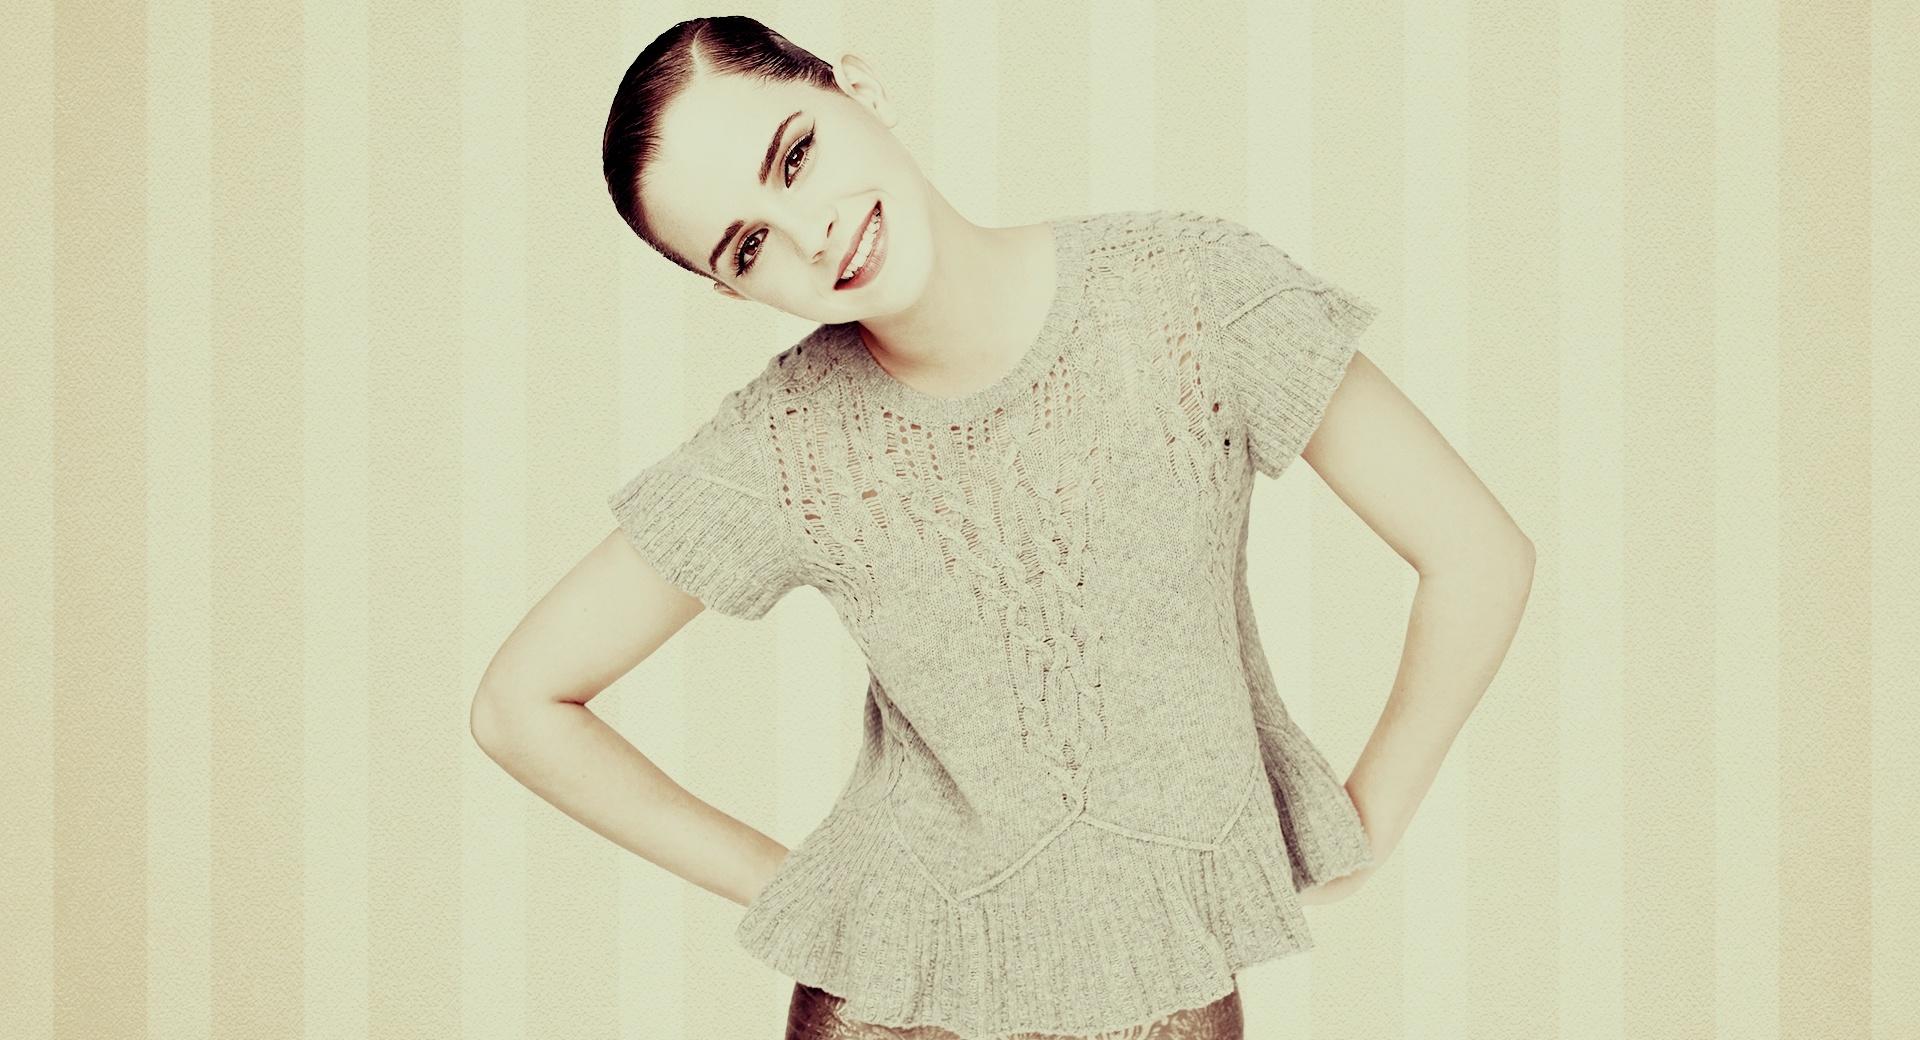 Emma Watson Fashion at 1280 x 960 size wallpapers HD quality